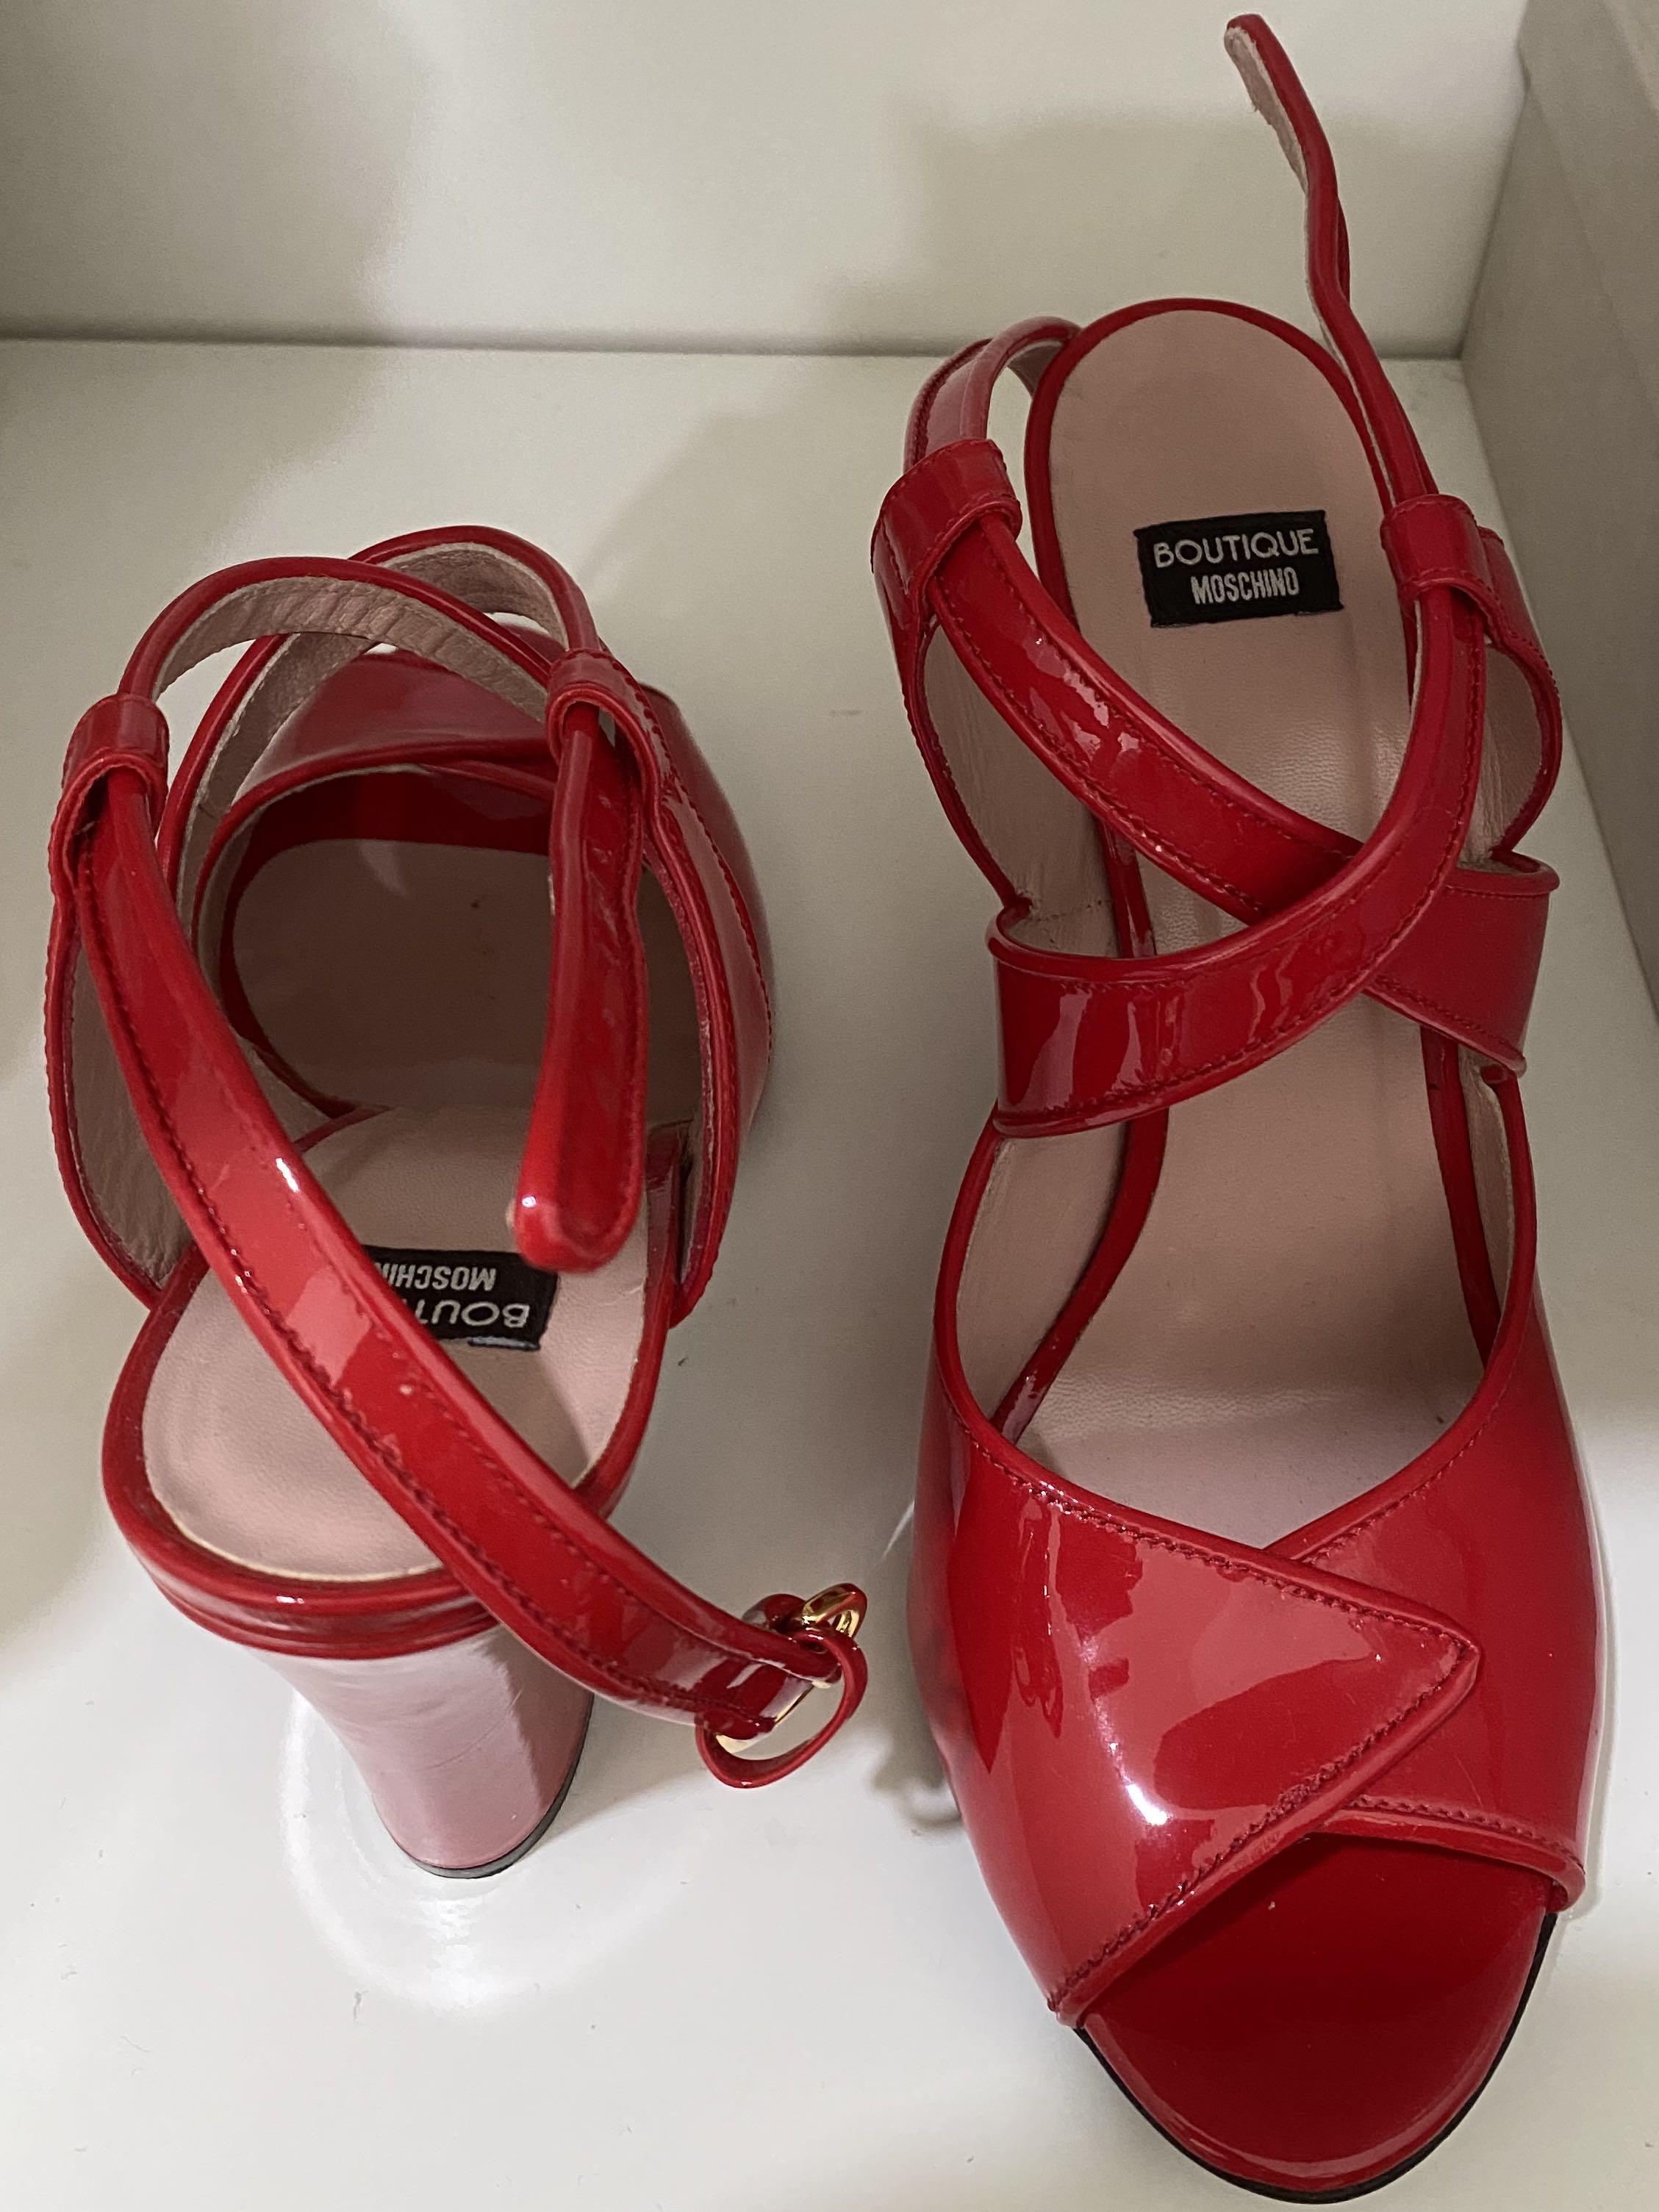 moschino red heels